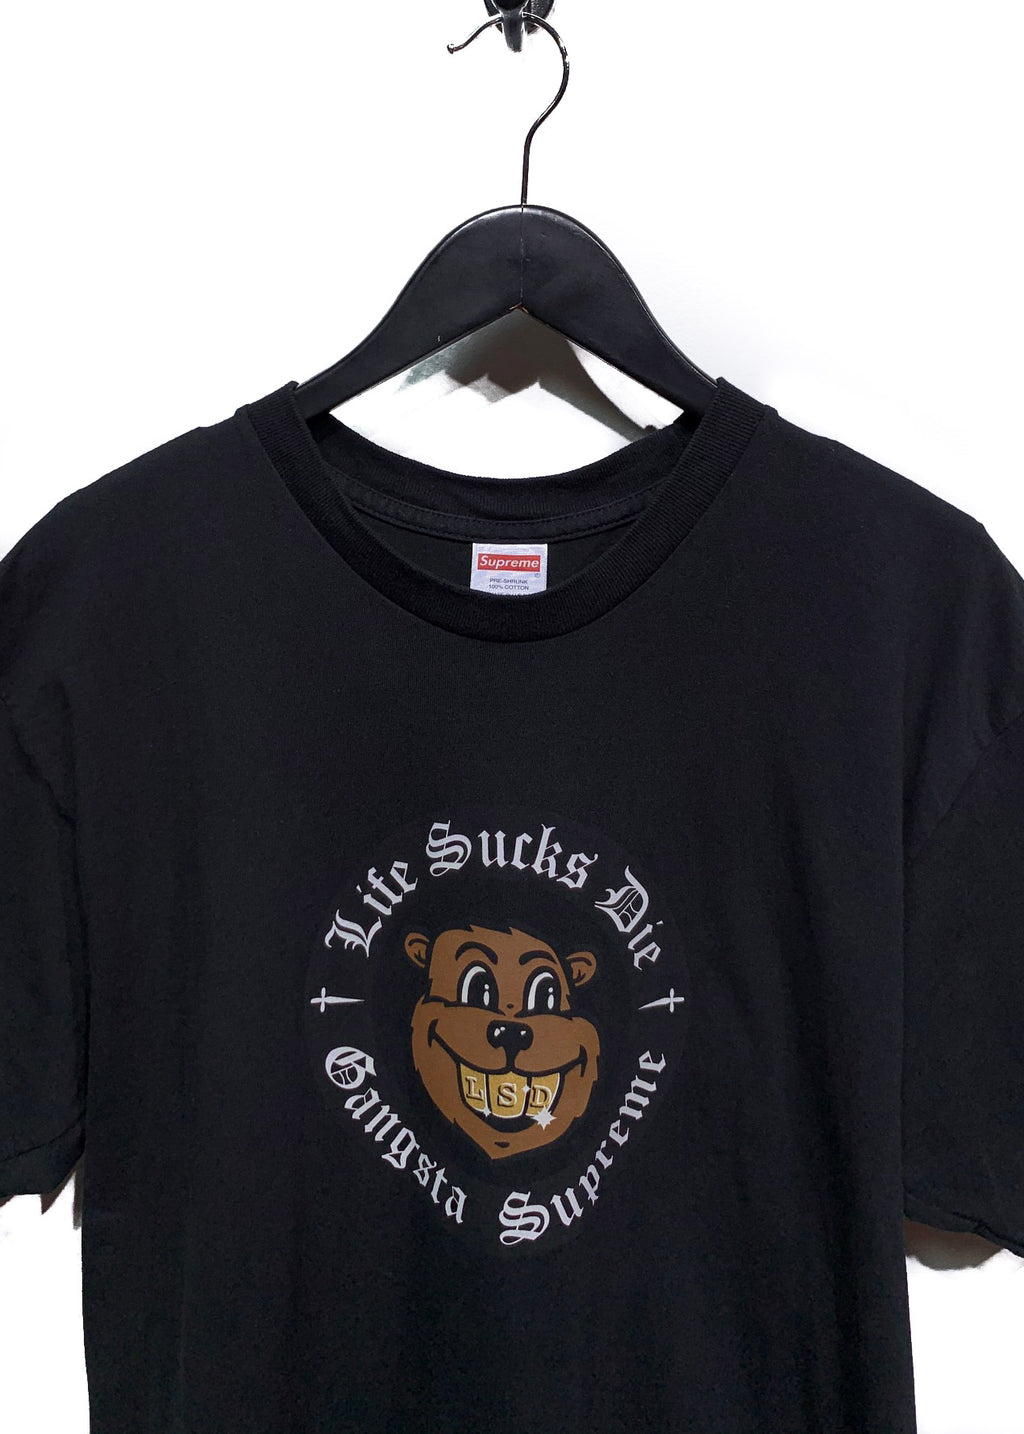 T-shirt noir Supreme à imprimé "Life Sucks Die - Gangsta Supreme"